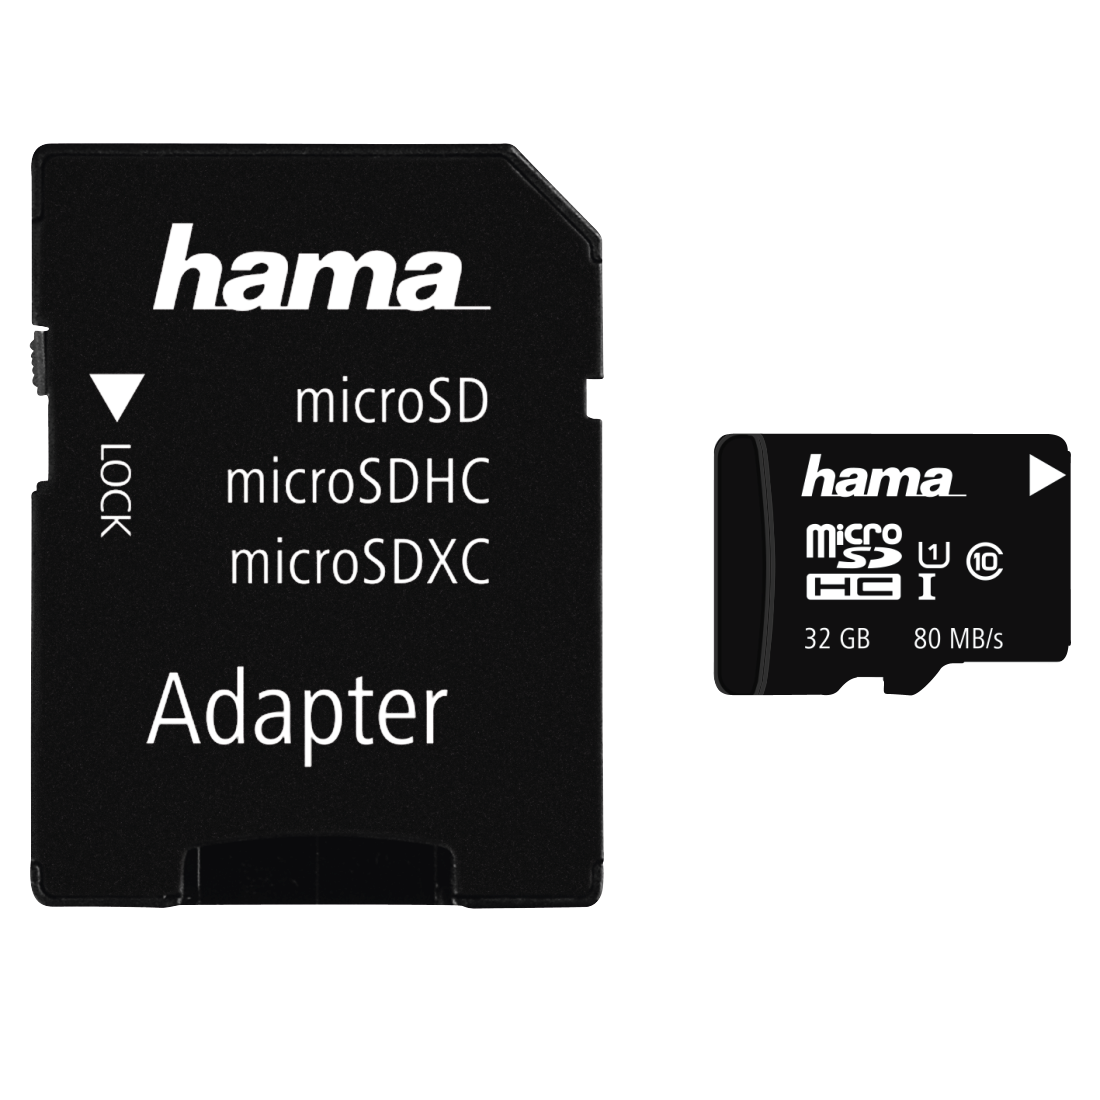 Hama microSDHC 32GB Class 10 UHS-1 80MB's +Adapter